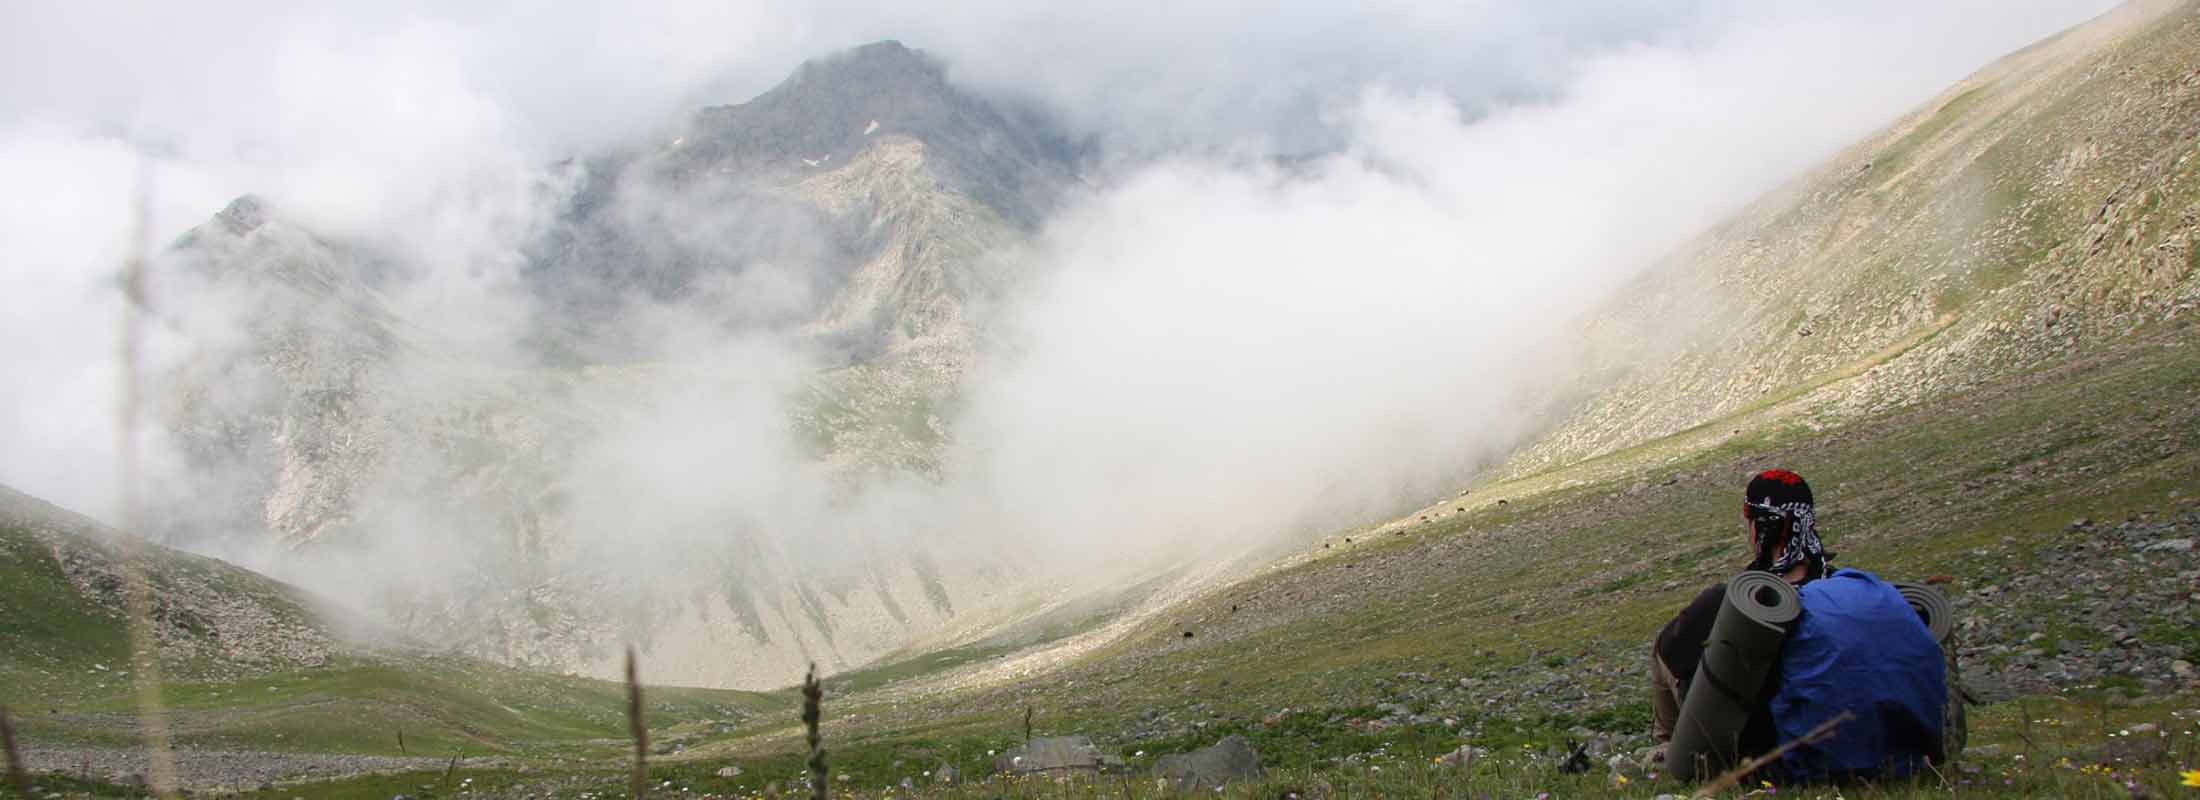 MOUNT KACKAR AND MOUNT ARARAT COMBINED EXPEDITION TREKKING CLIMBING